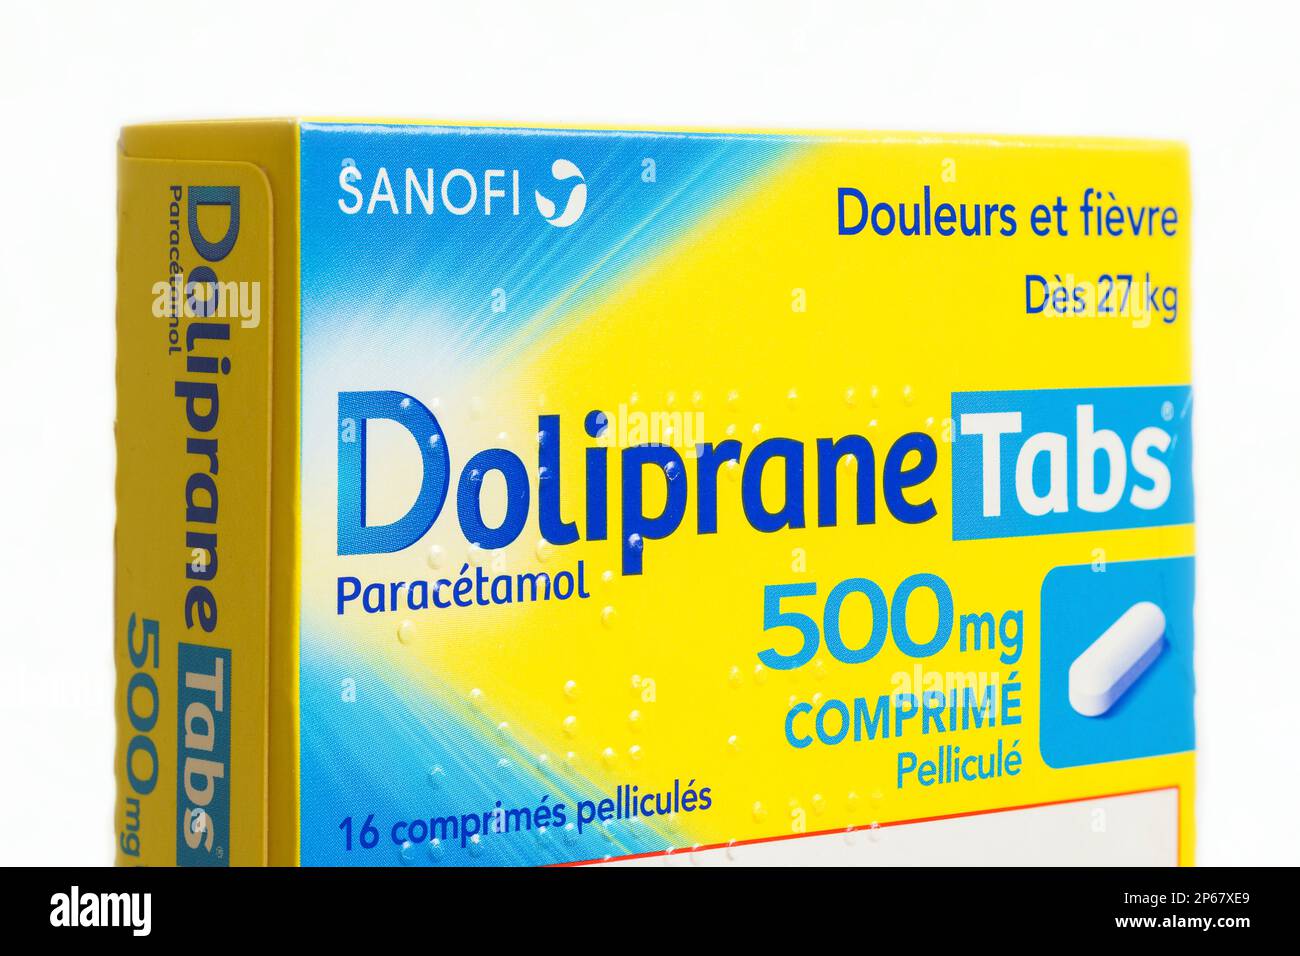 Doliprane 500 mg from Sanofi, Paracetamol tablets painkiller Stock Photo